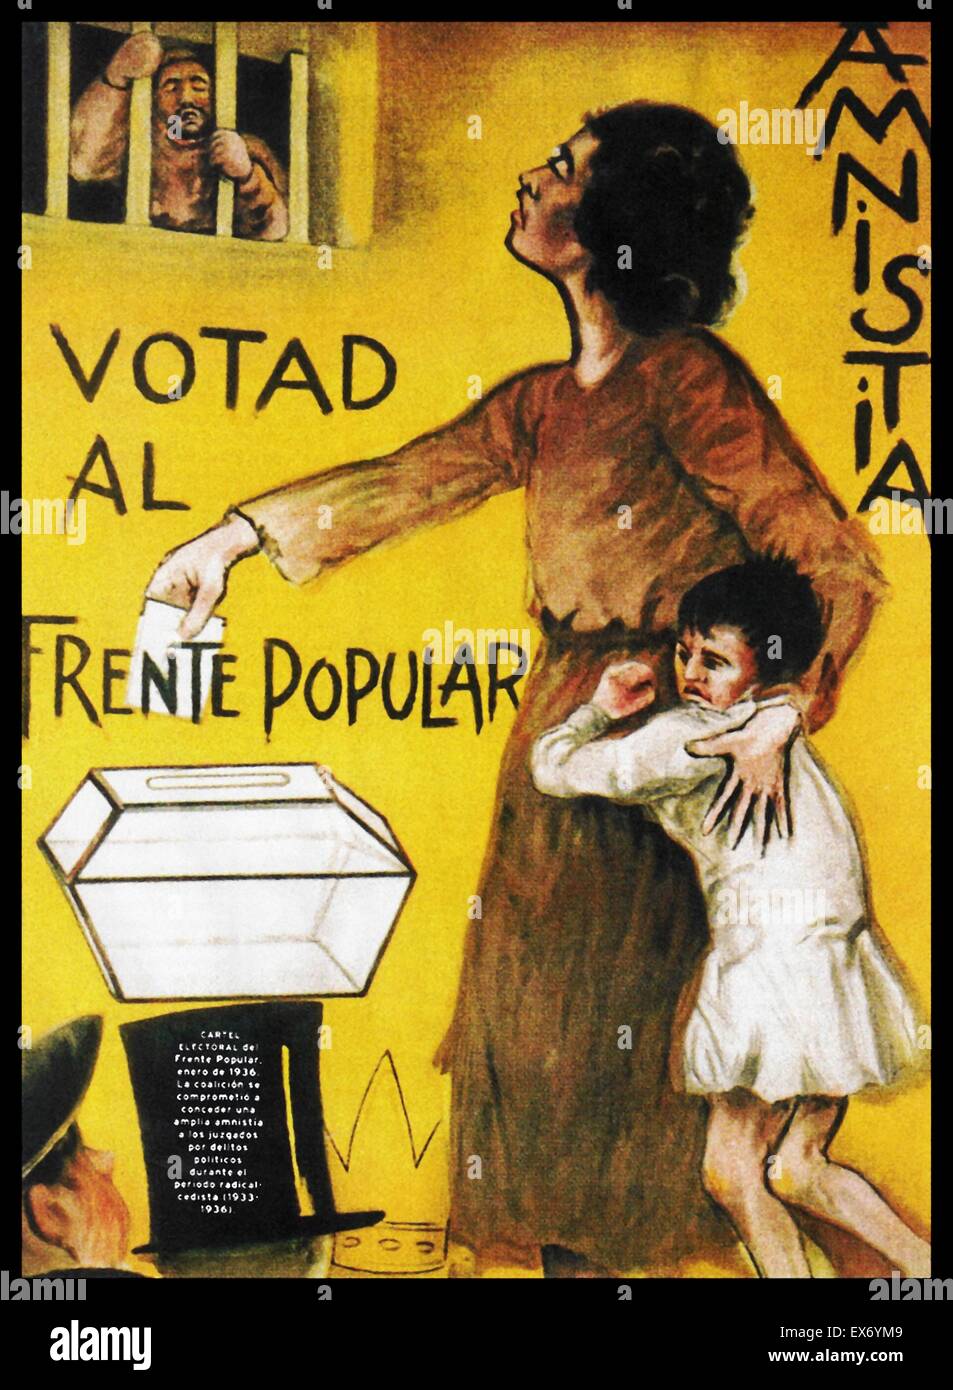 Spanish elections 1936: Popular Front propaganda poster Stock Photo - Alamy